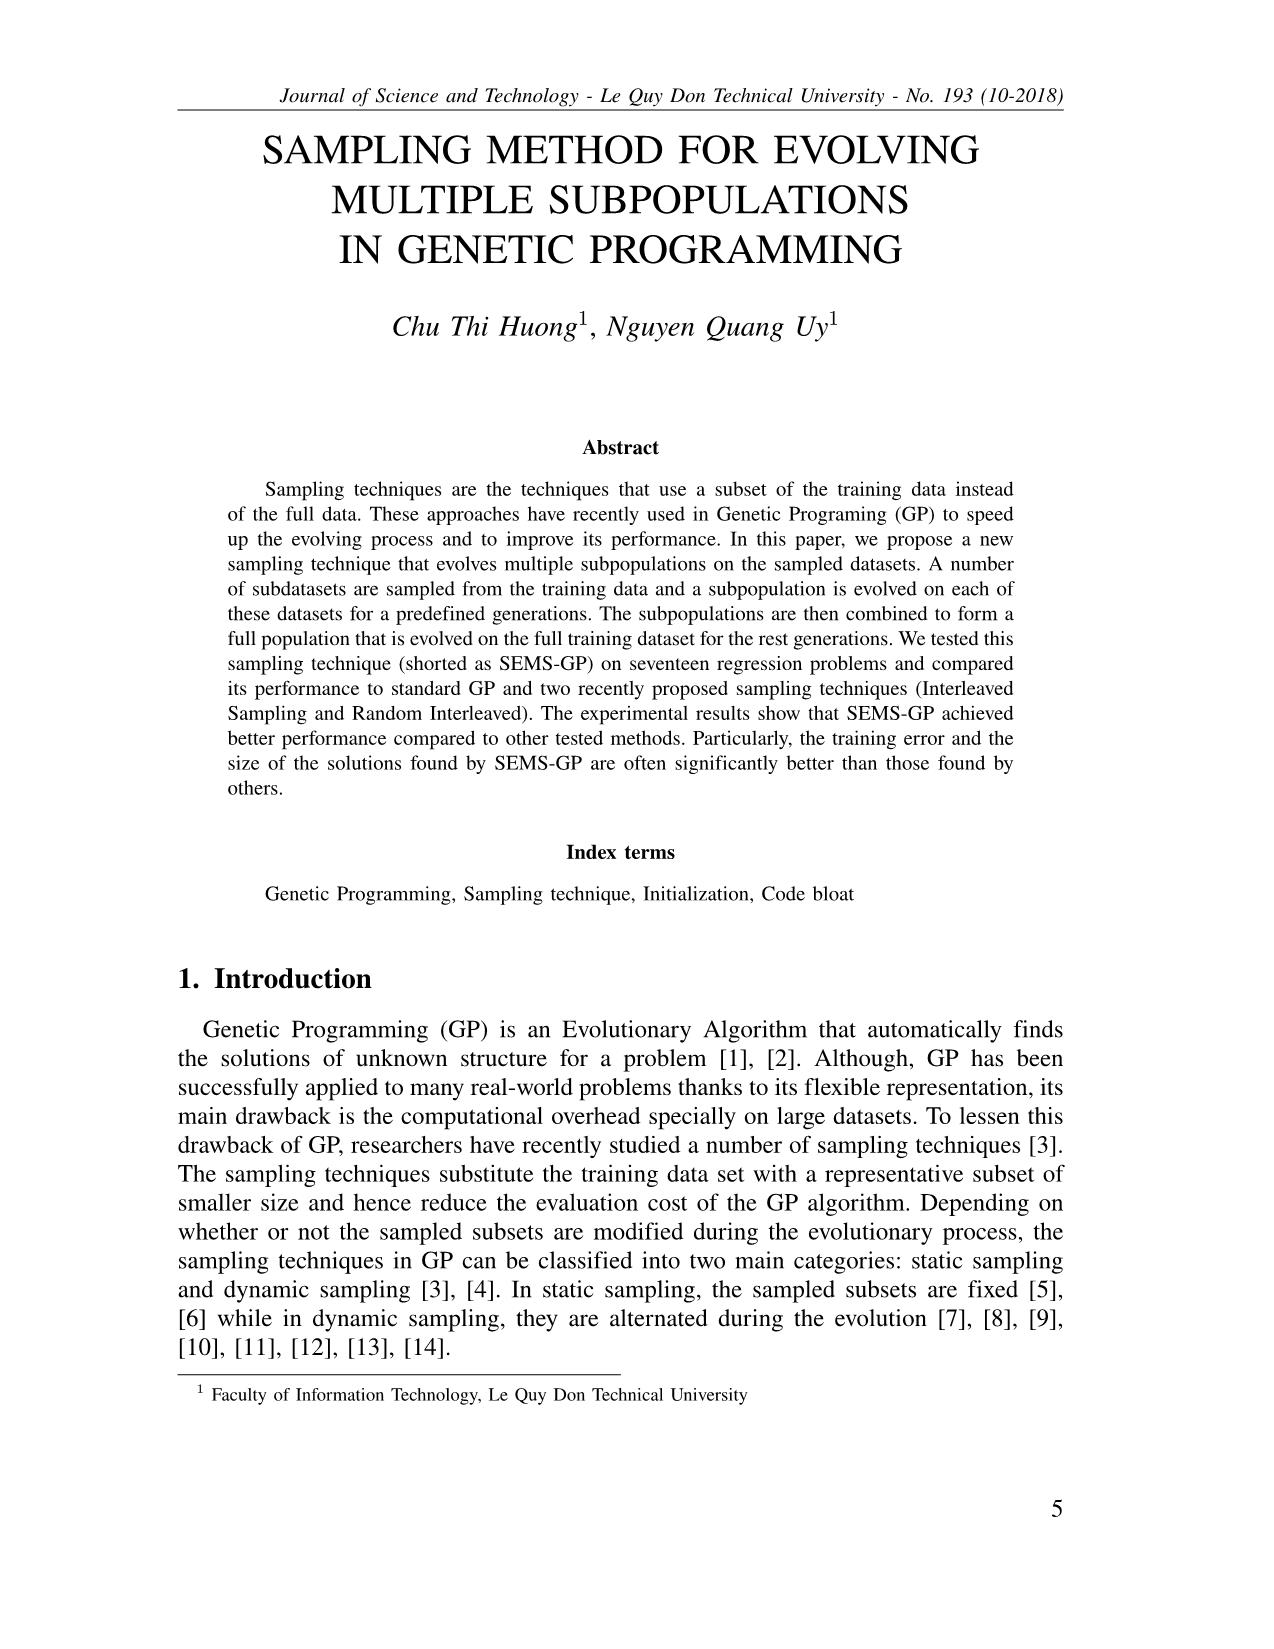 Sampling method for evolving multiple subpopulations in genetic programming trang 1